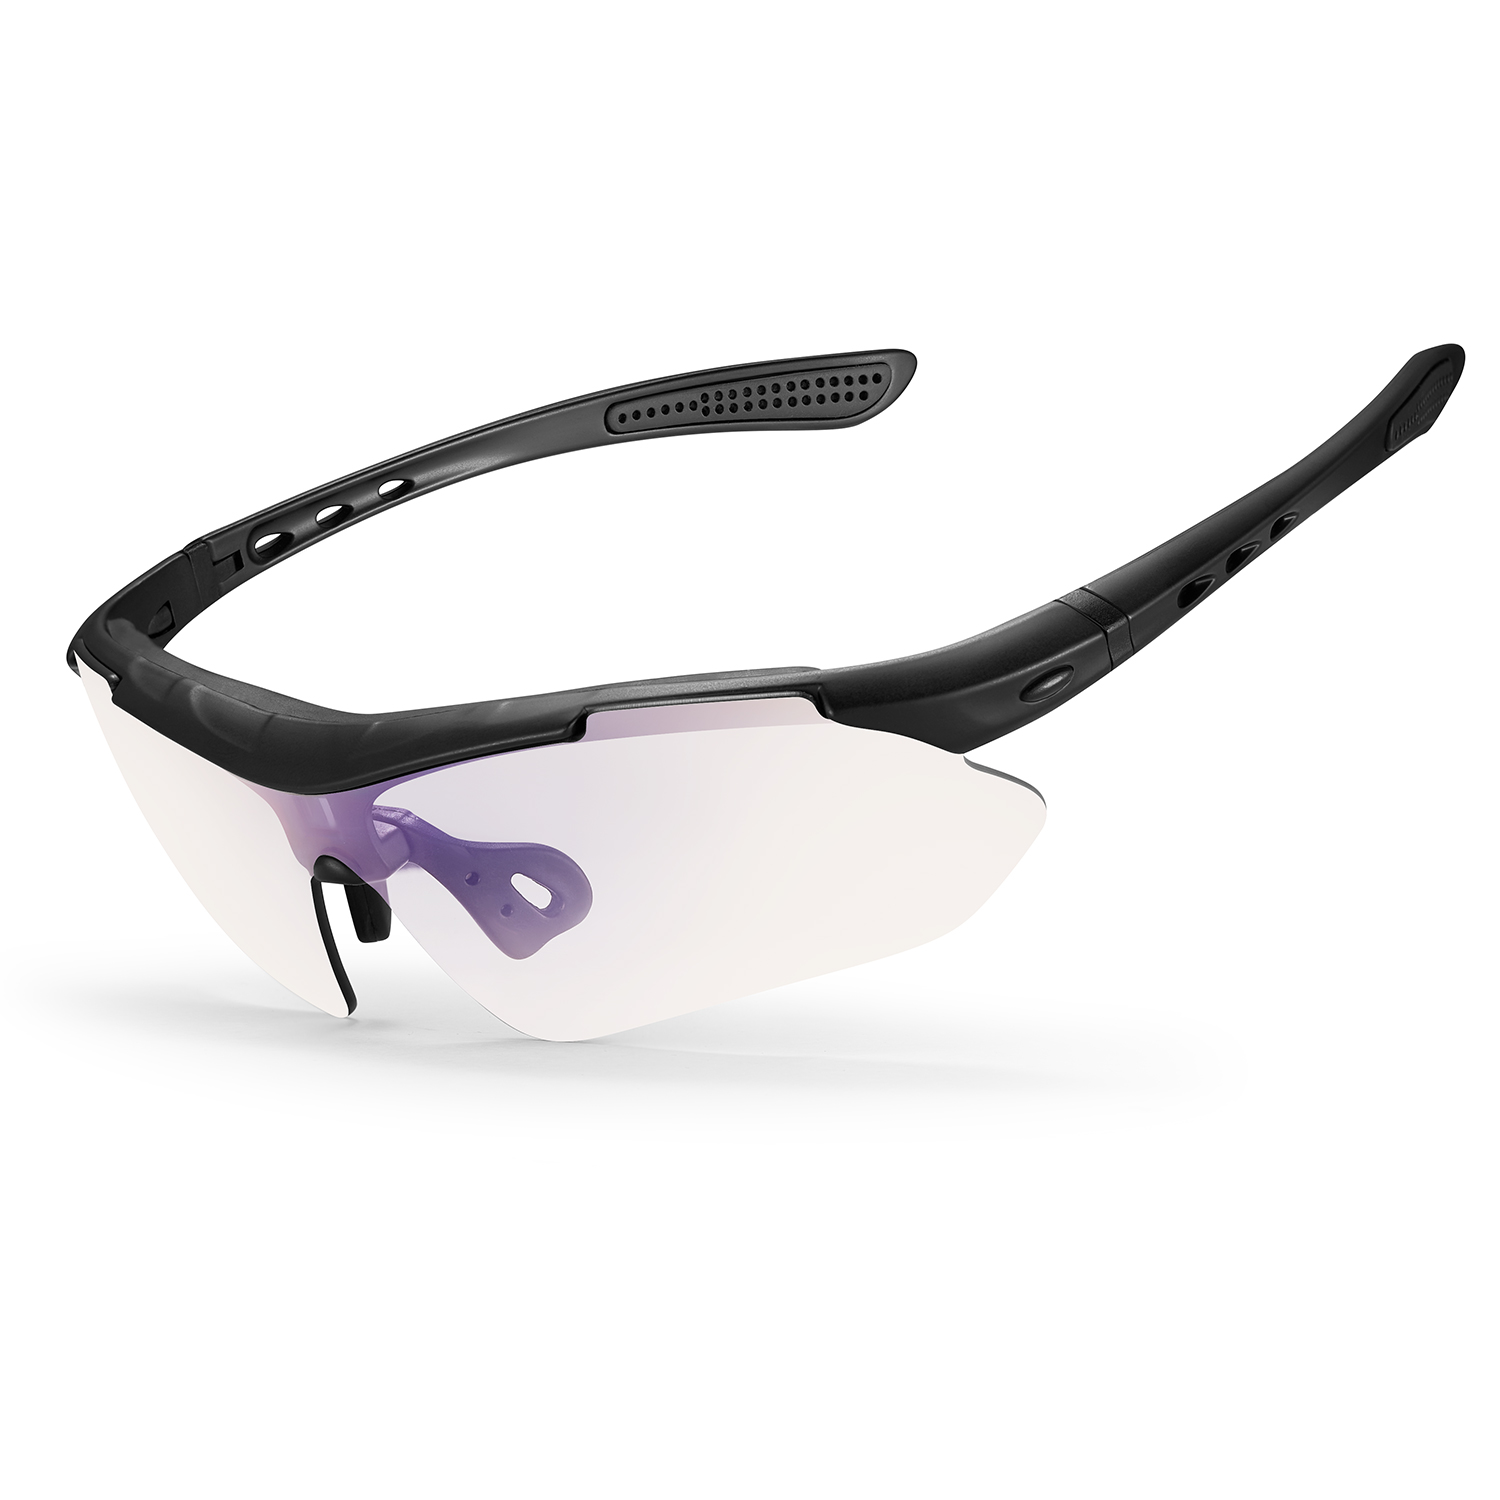 Reanson Custom Polarized 5 Lens Cycling Sunglasses